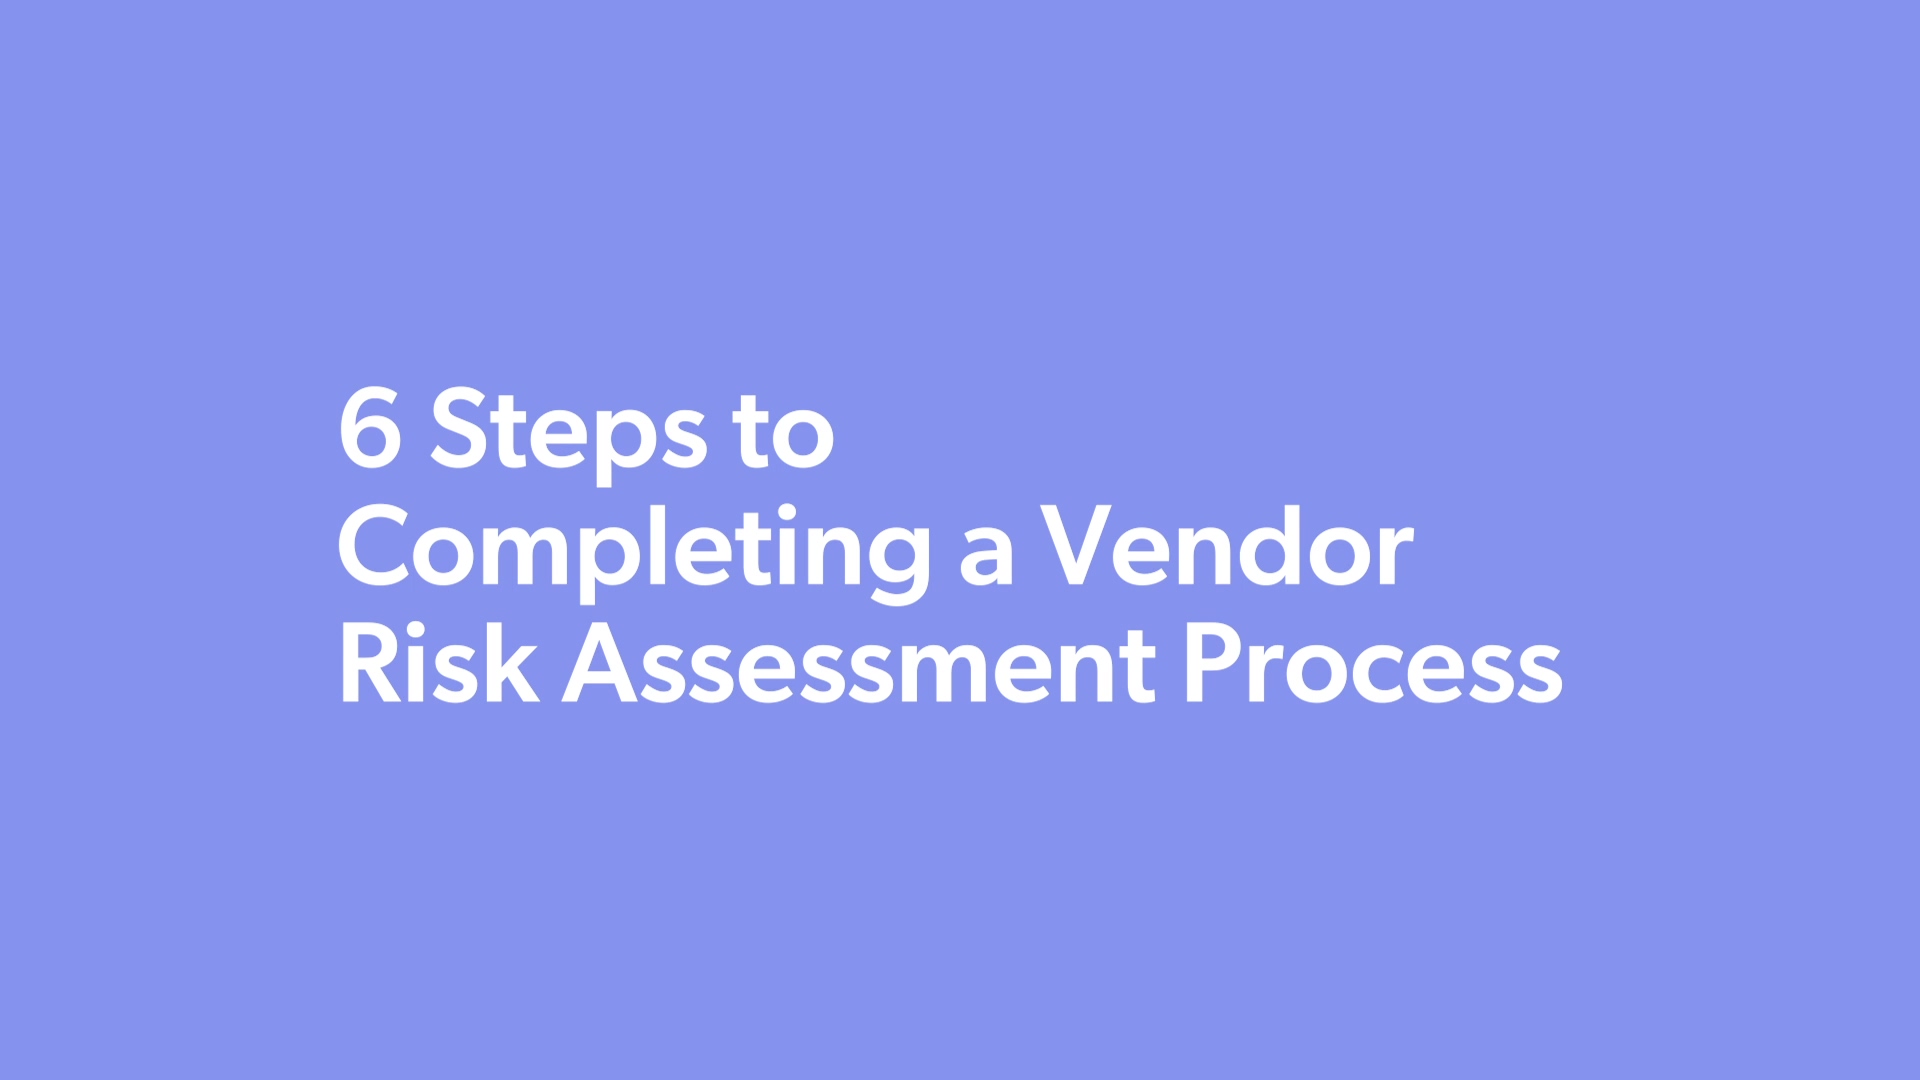 12.03.2020-6-steps-to-completing-a-vendor-risk-assessment-process